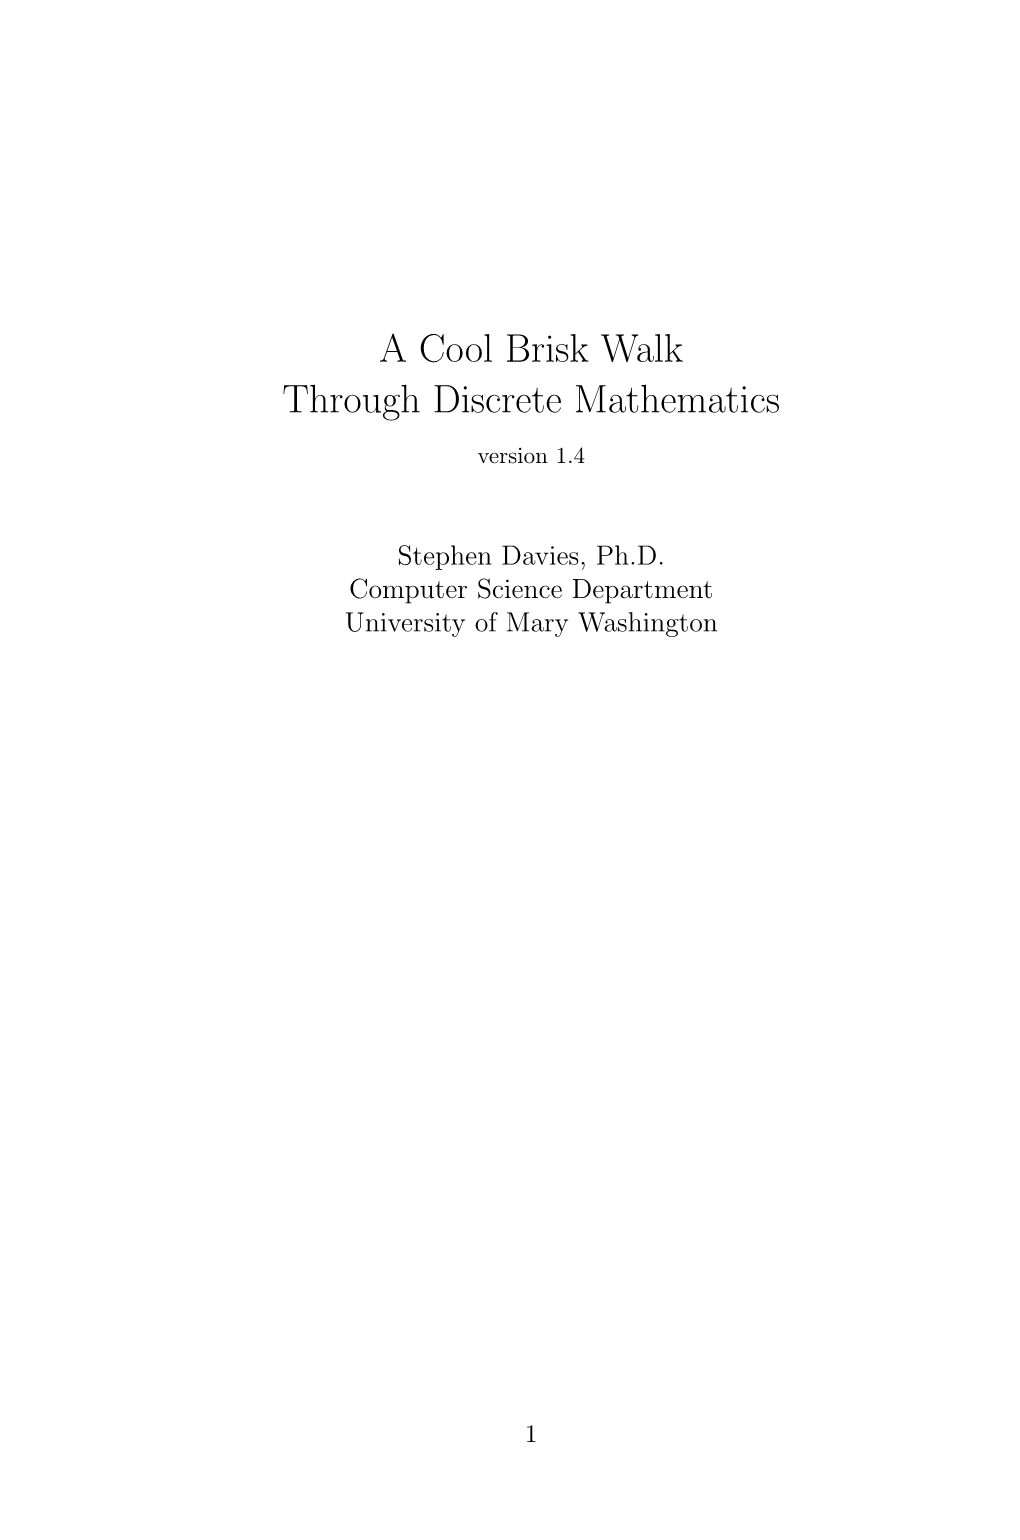 A Cool Brisk Walk Through Discrete Mathematics